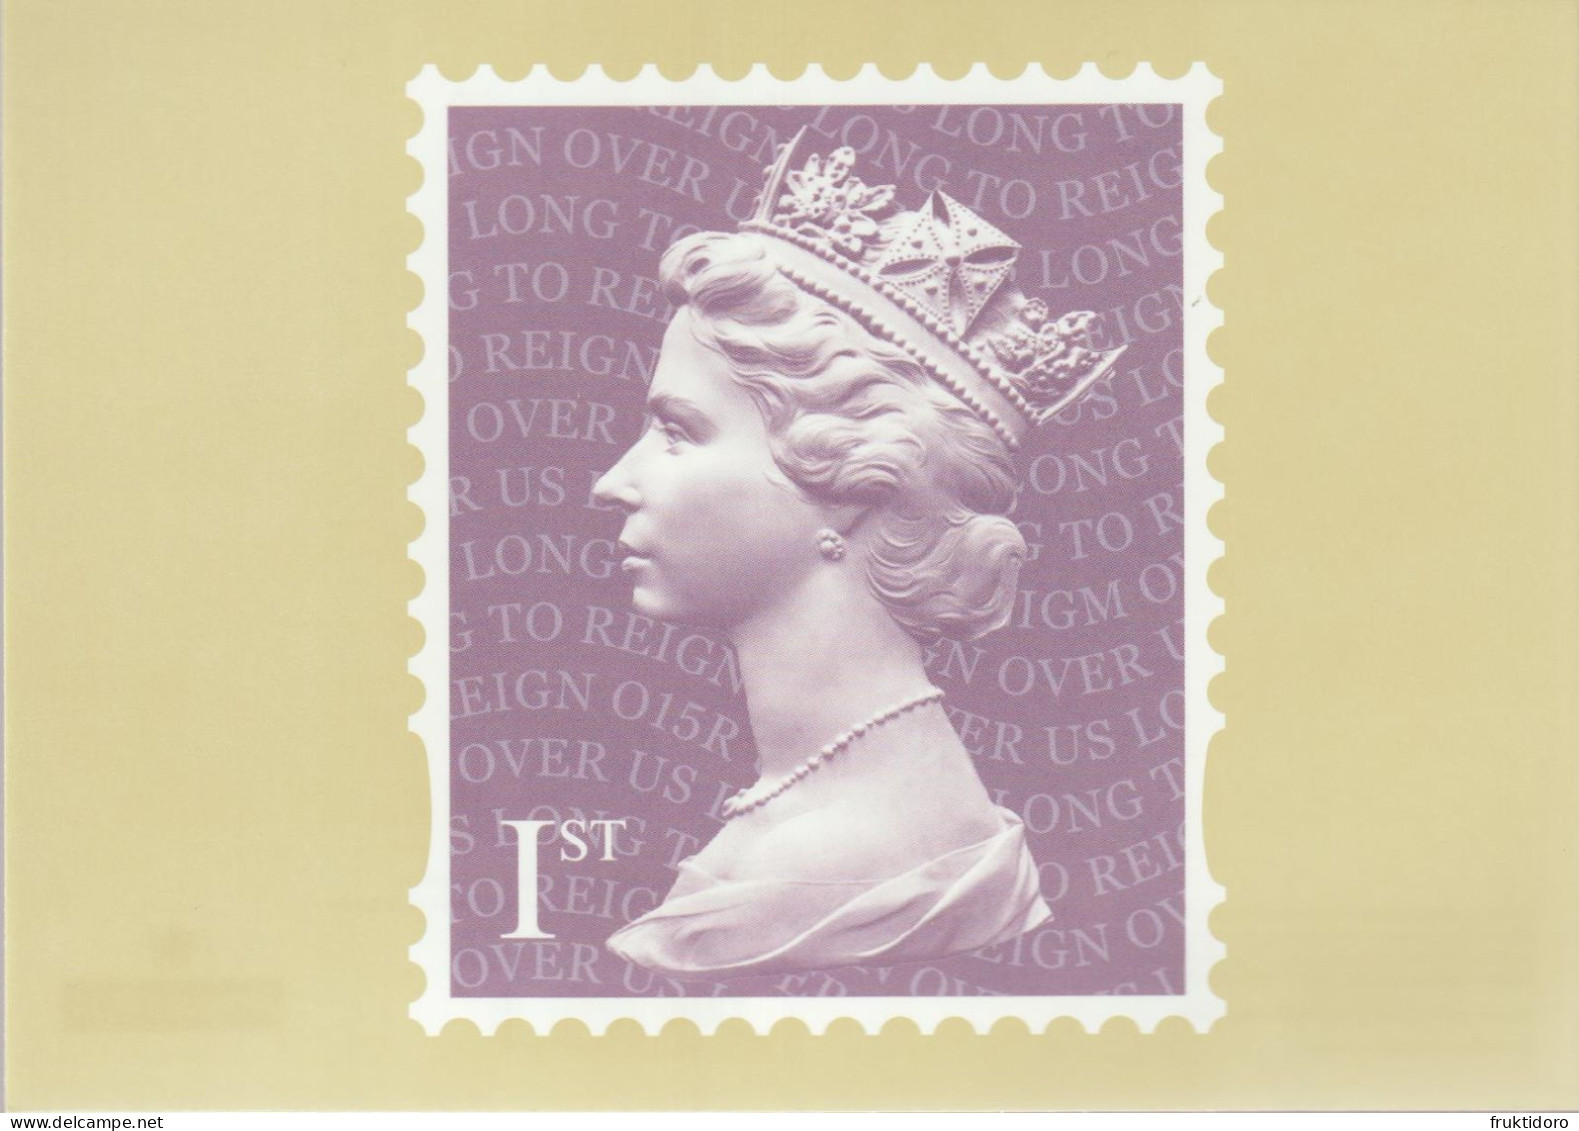 United Kingdom Postcards 2015 About Stamps In Mi Block 96 Queen Elizabeth II - Long To Reign Over Us ** - Colecciones Completas